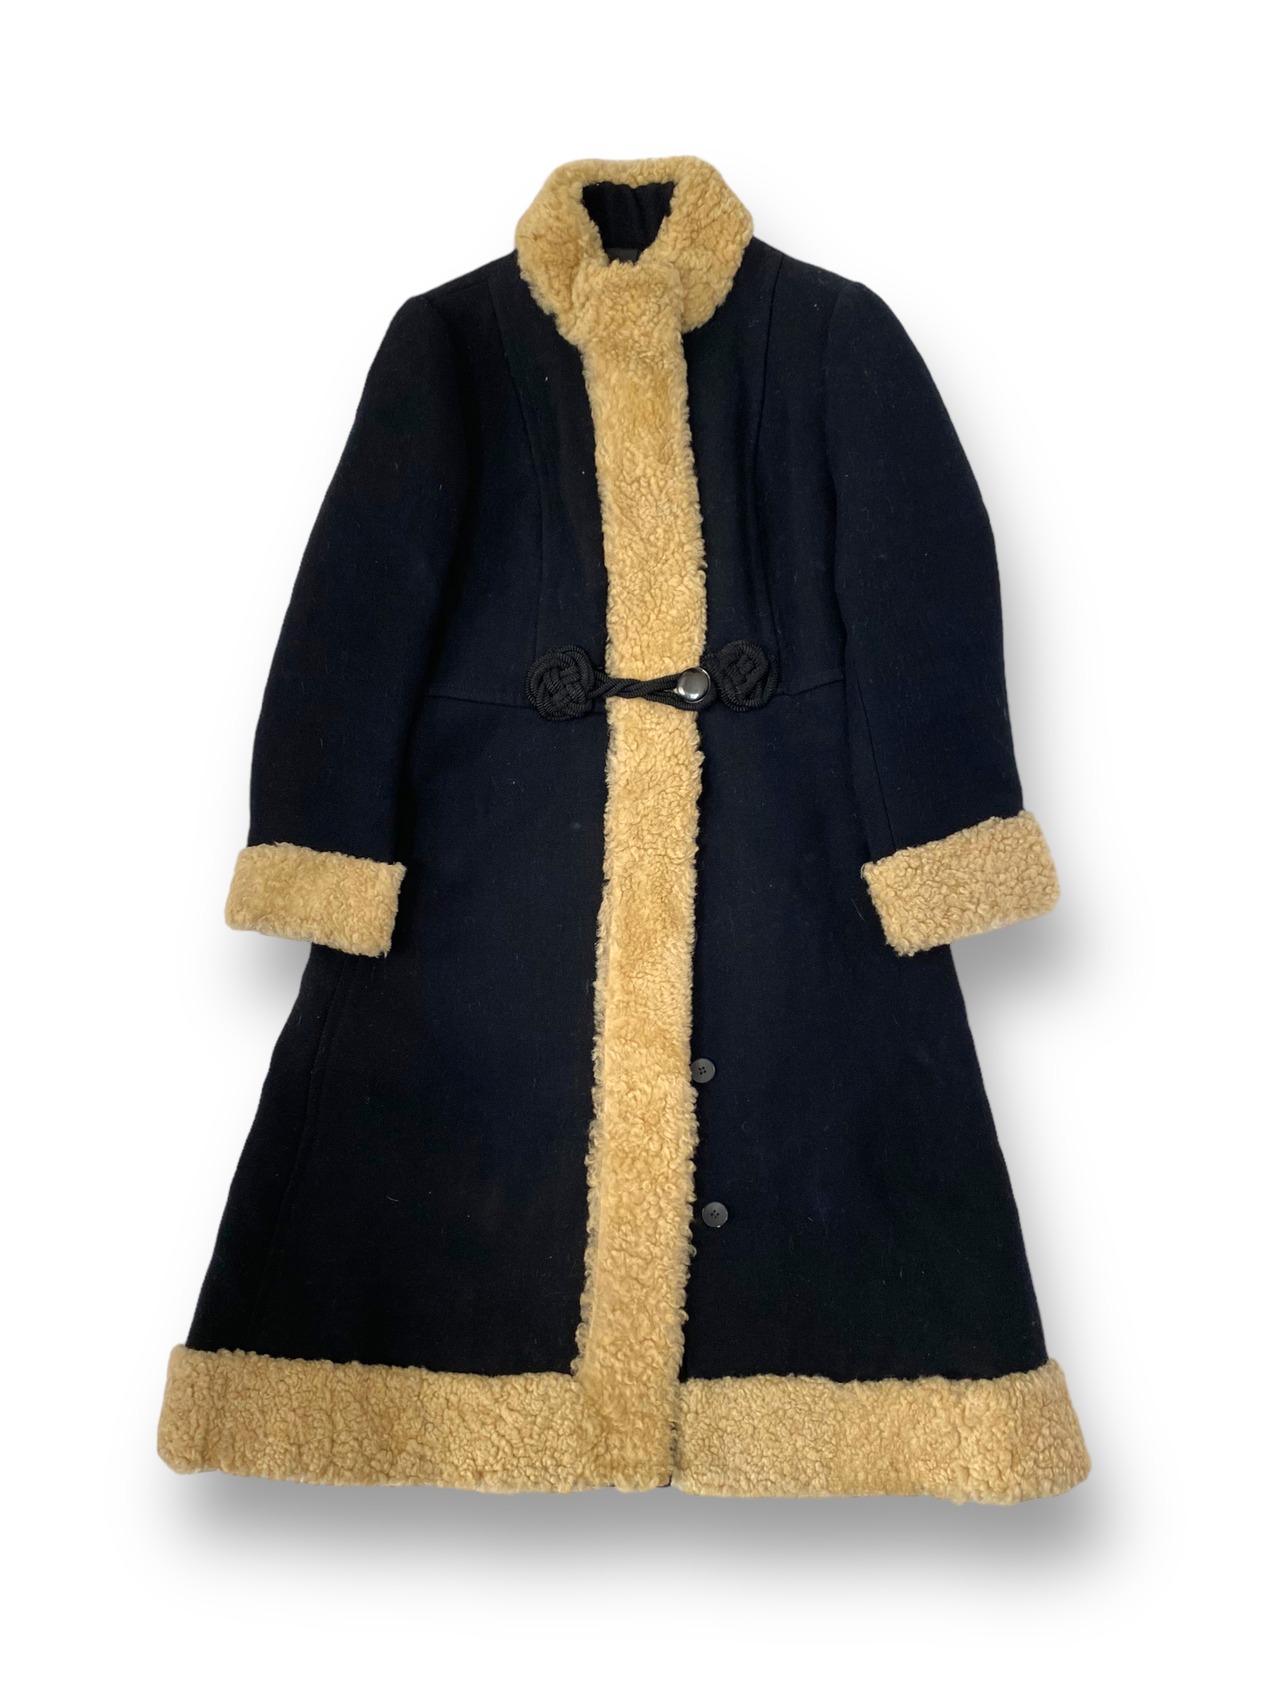 80’s Japanese vintage coat